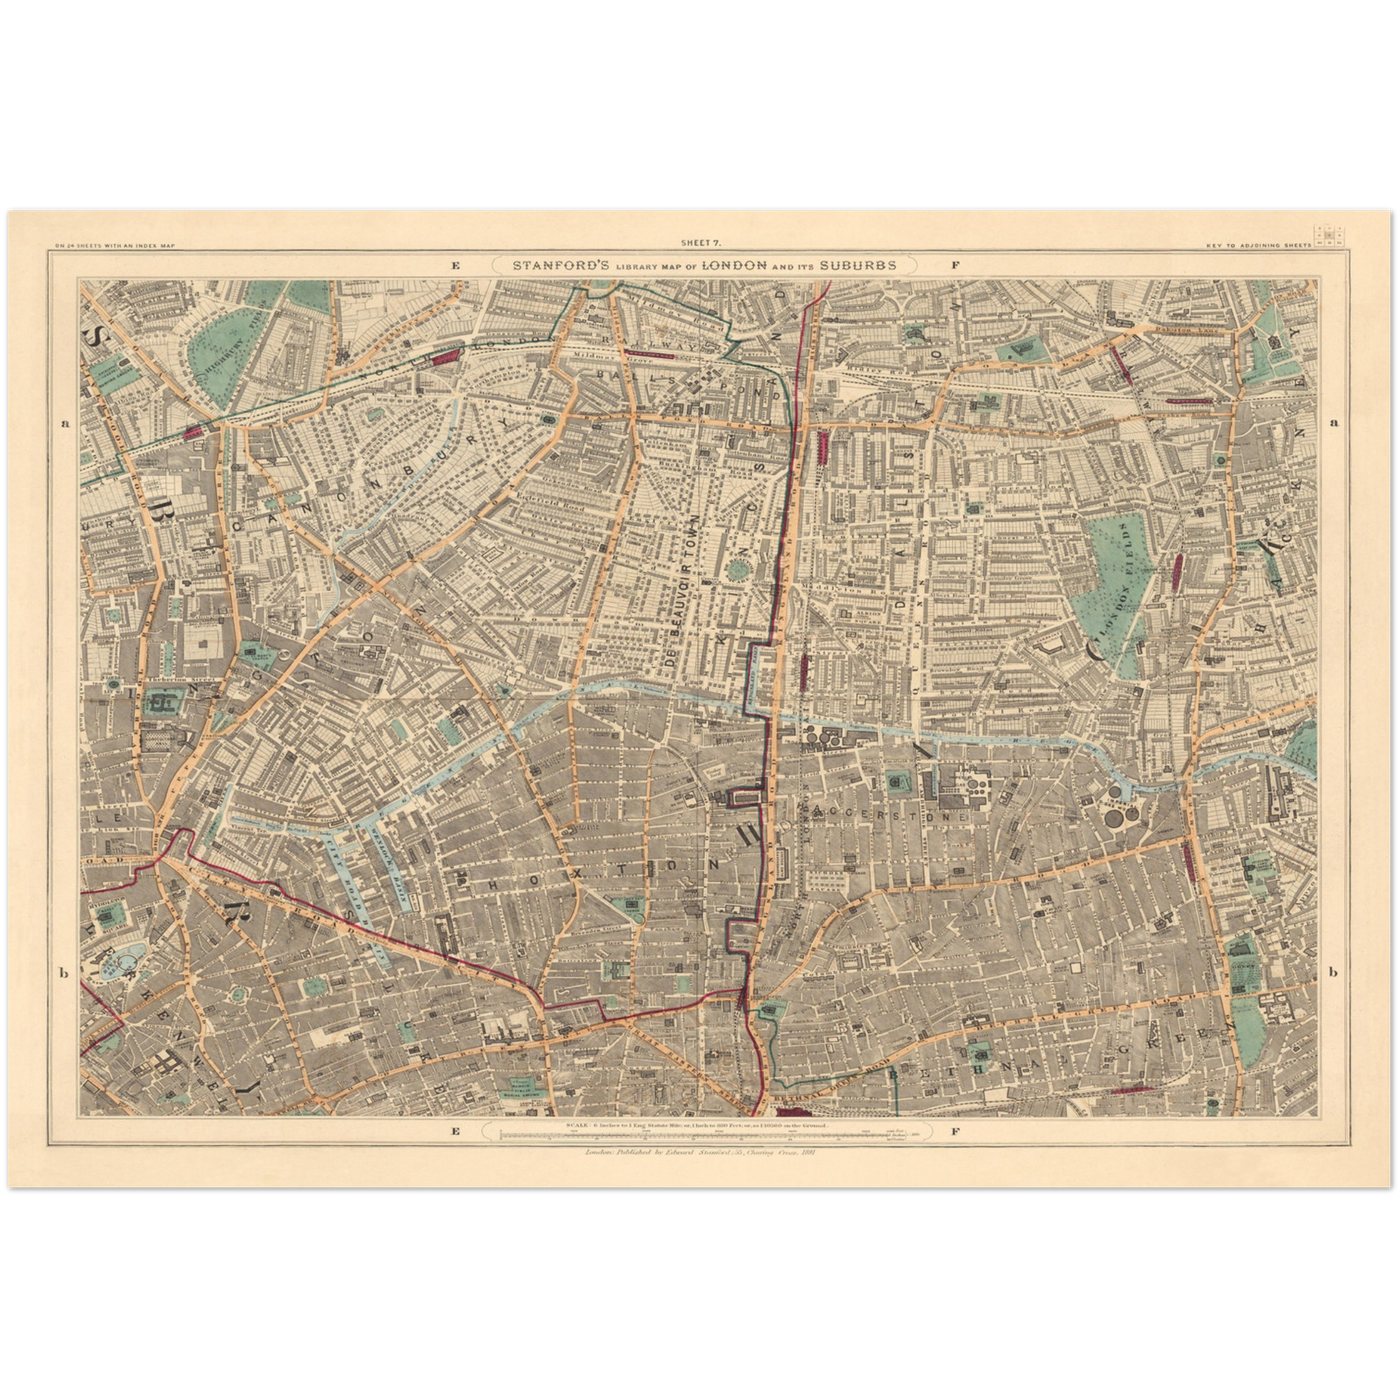 Alte Farbkarte von East London, 1891 - Hoxton, Haggerston, Dalston, Hackney, Bethnal Green - N1, N5, E8, E2, EC1